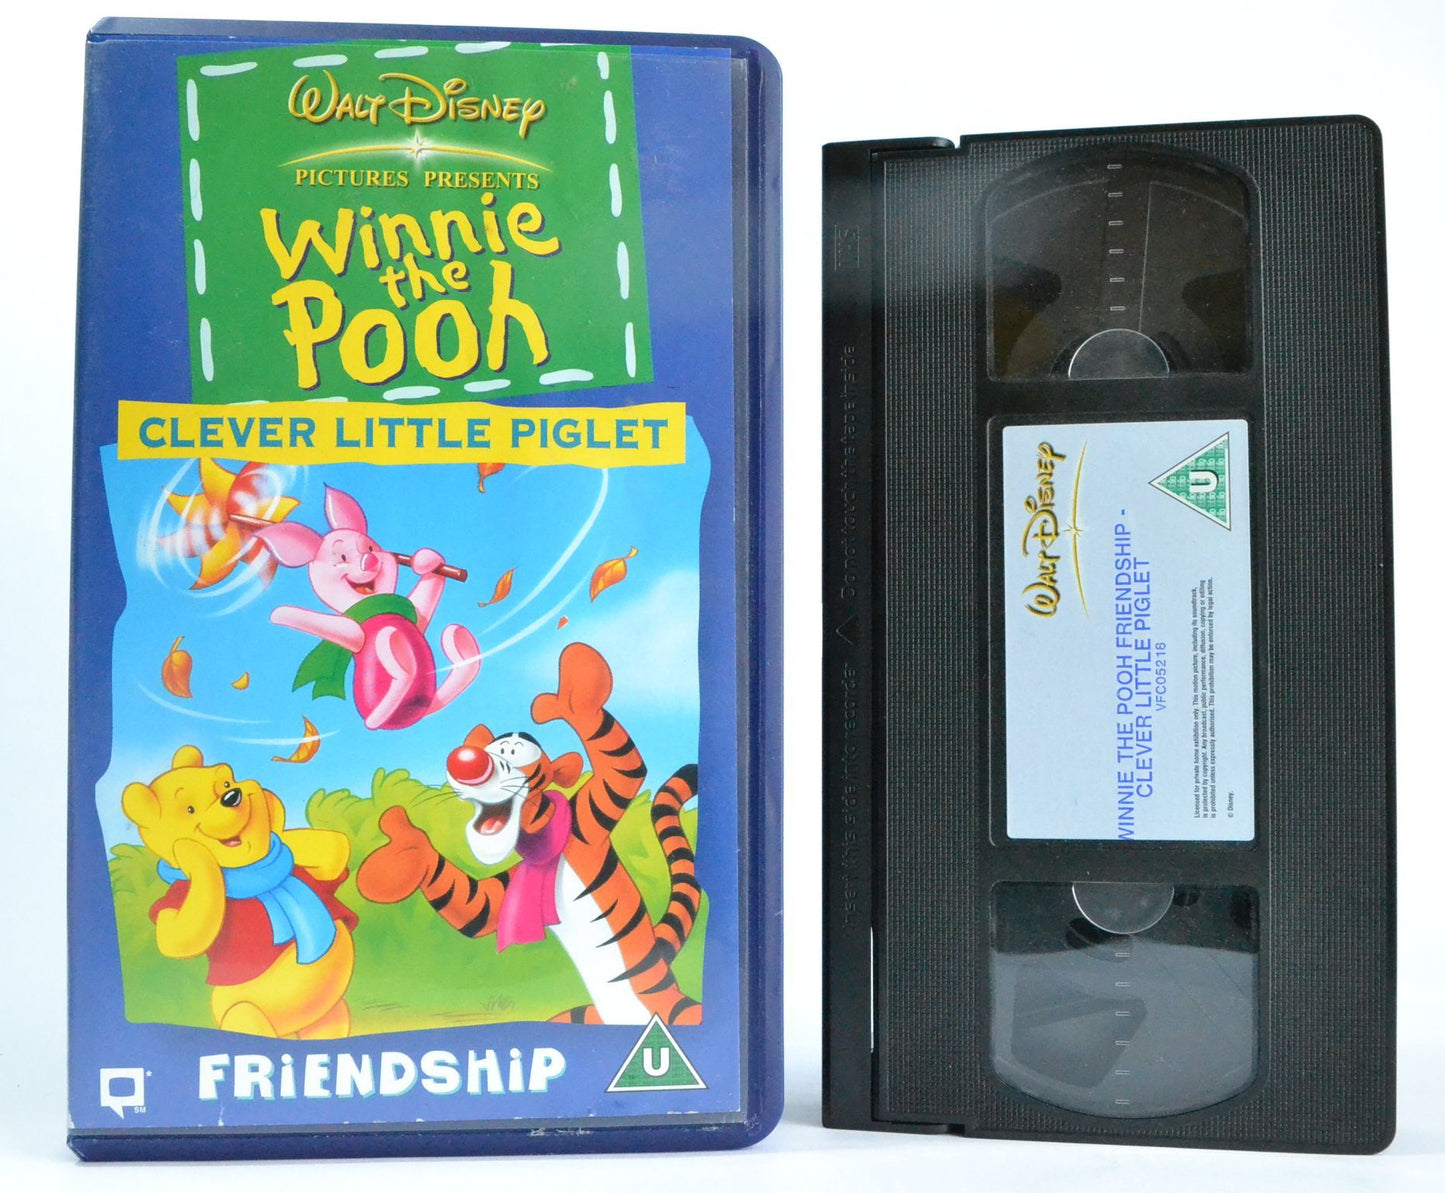 Winnie The Pooh: Clever Little Piglet - Friendship - Disney Educ Animation - VHS-